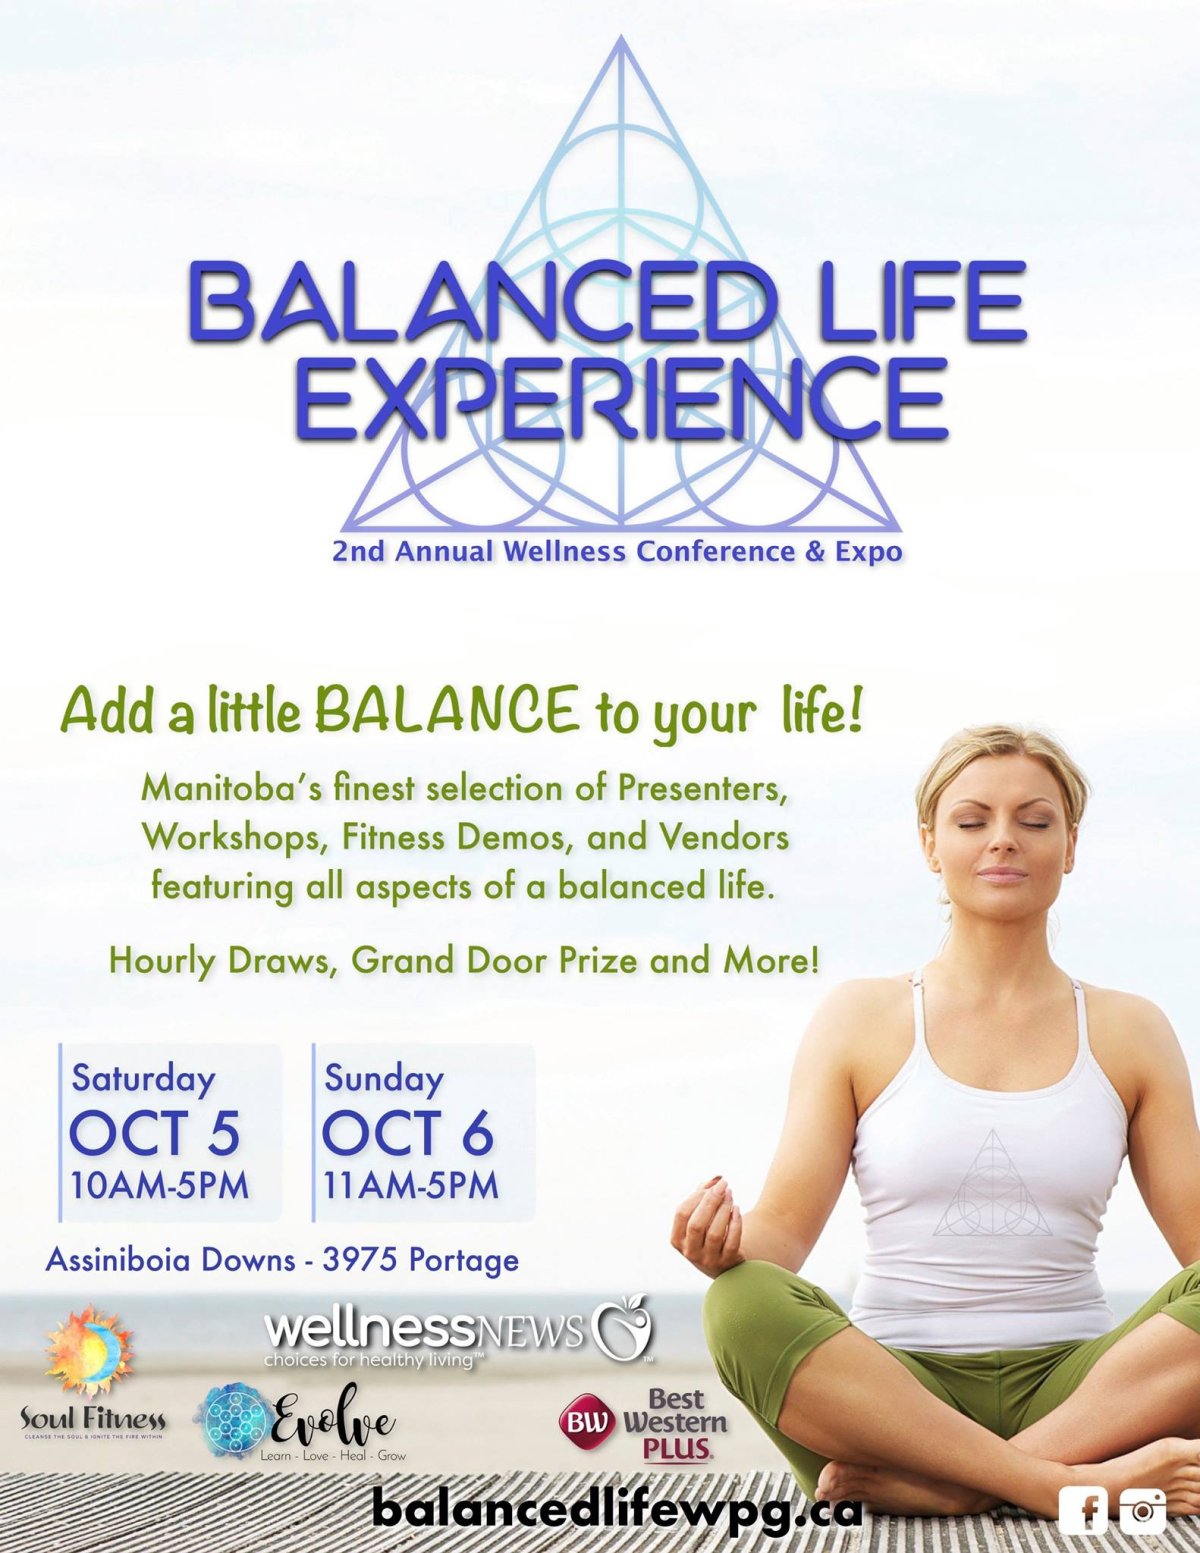 Vendors Wanted! – Balanced Life Experience - image